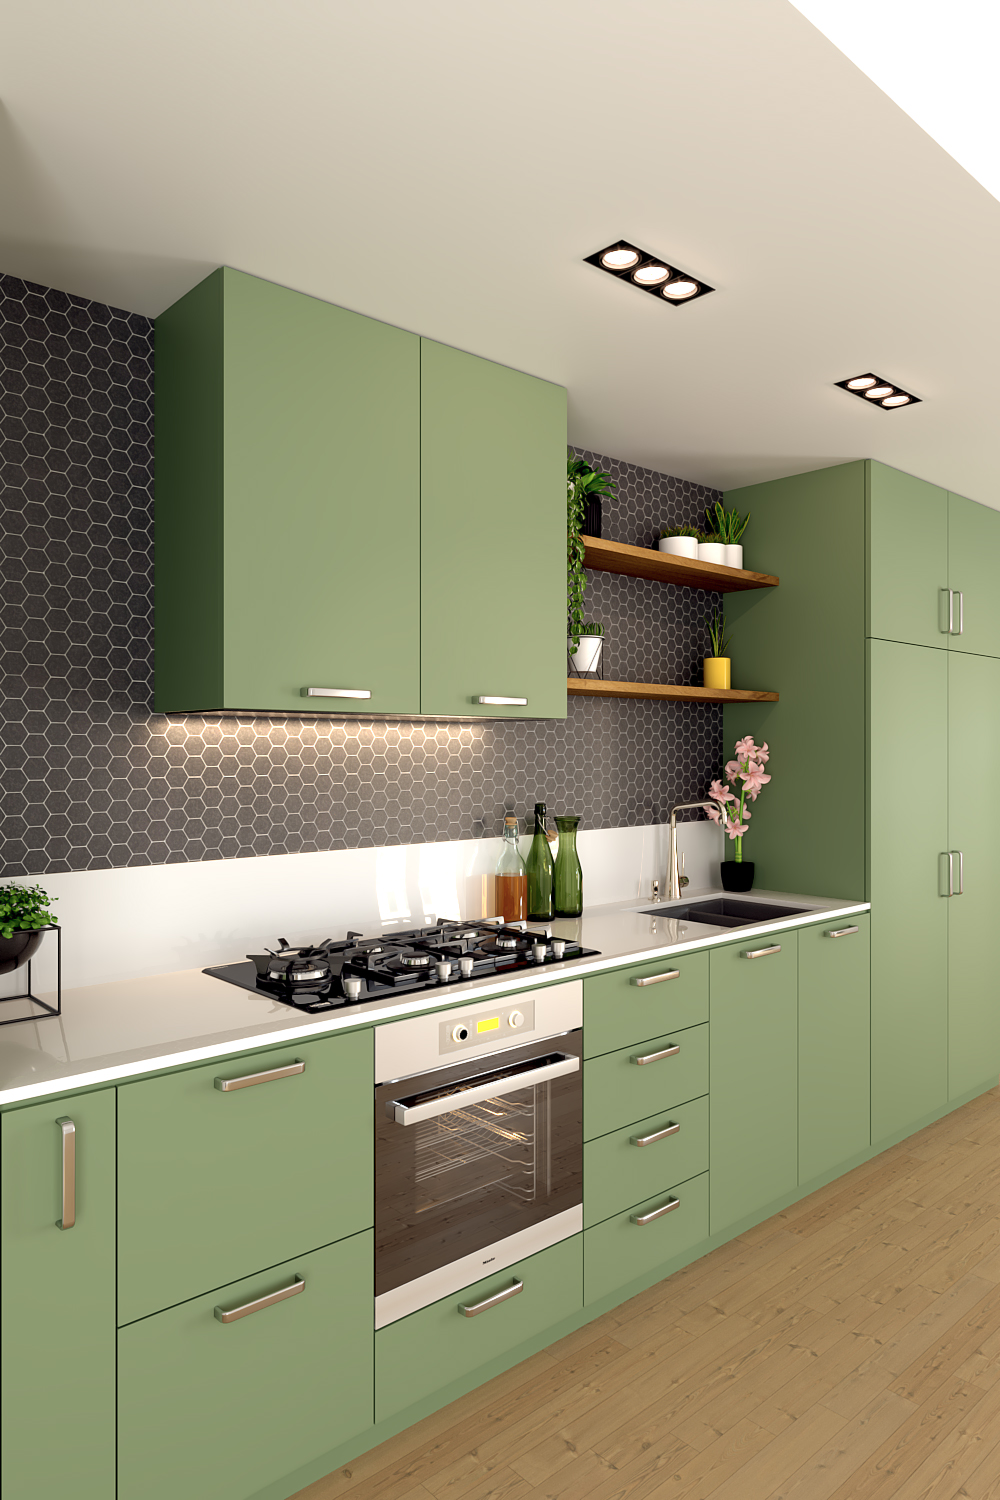 51+ dapur minimalis sederhana tanpa kitchen set - Dapur Minimalis 2021